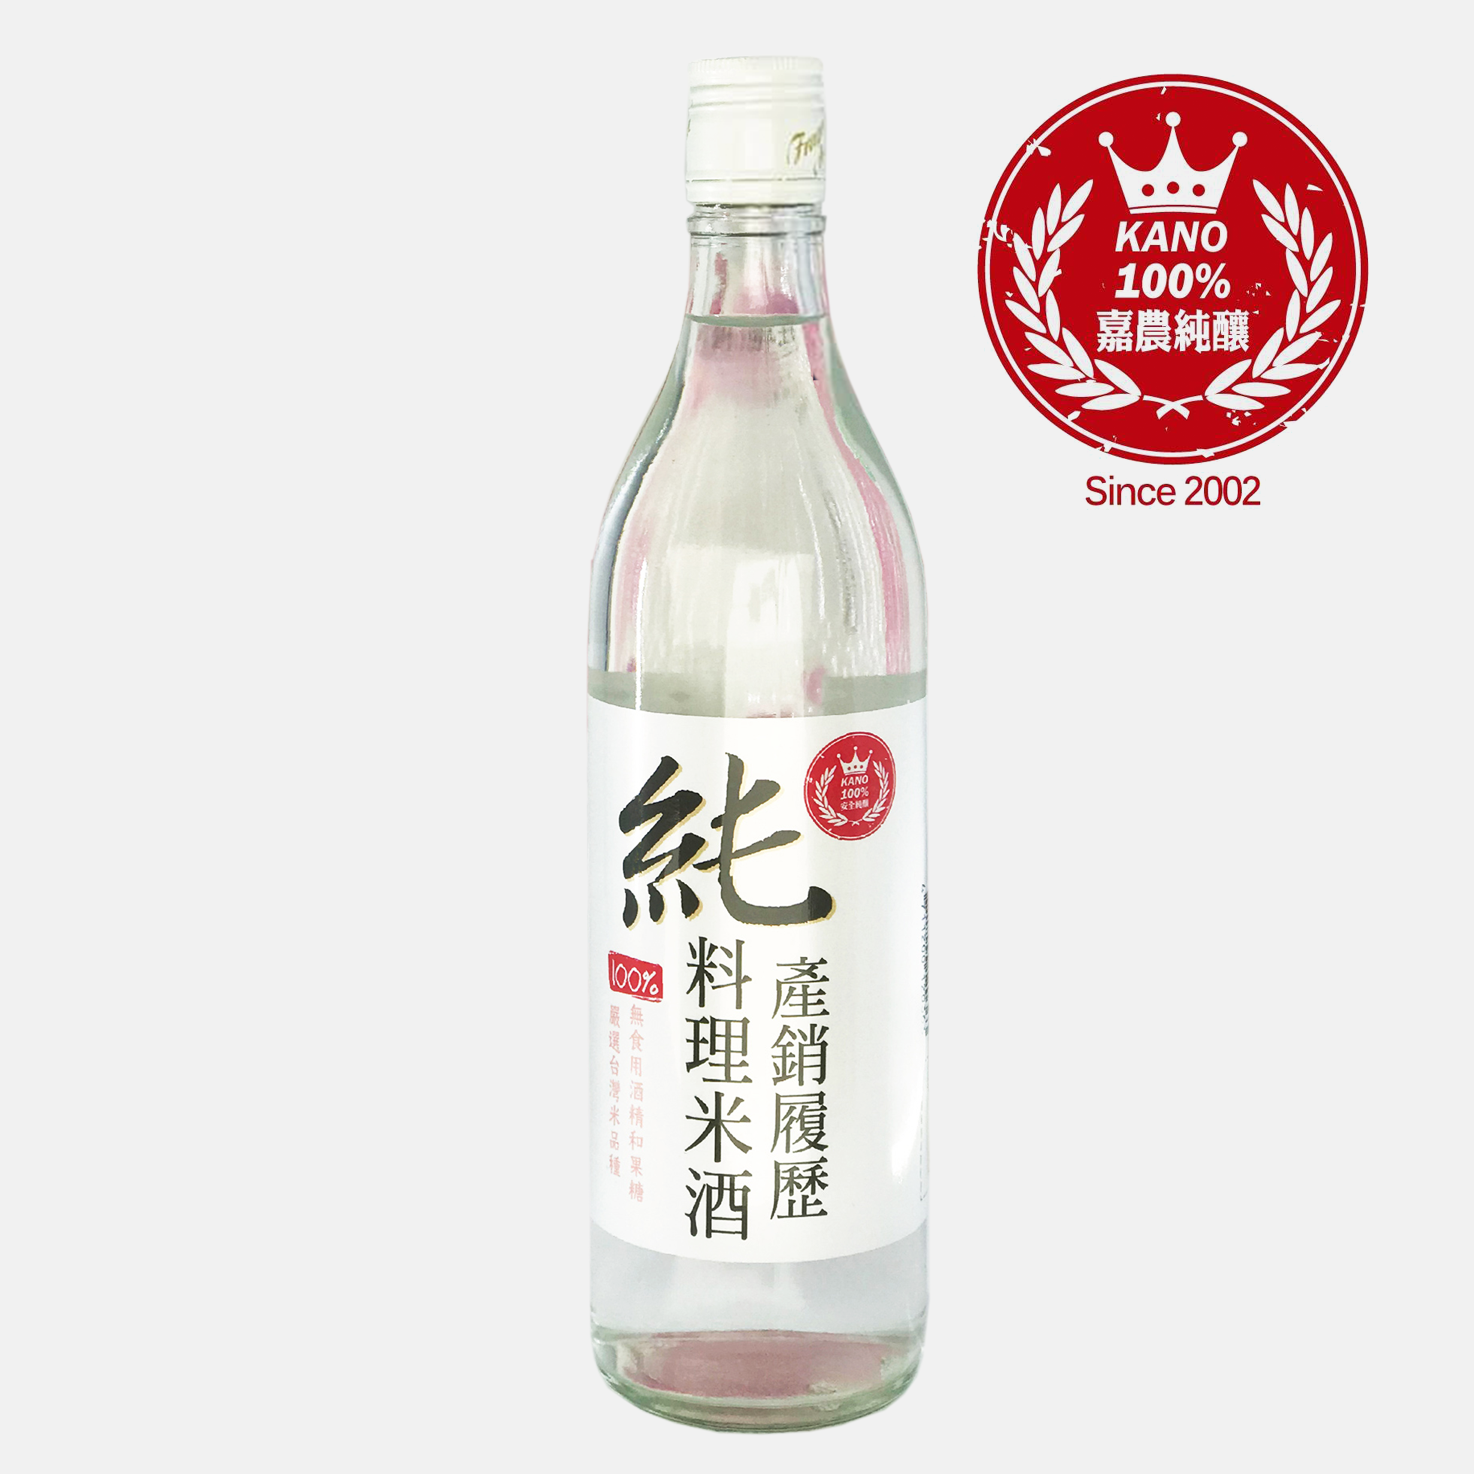 Kano Taiwan Pure Rice Wine 嘉農產銷履歷純米酒 600ml